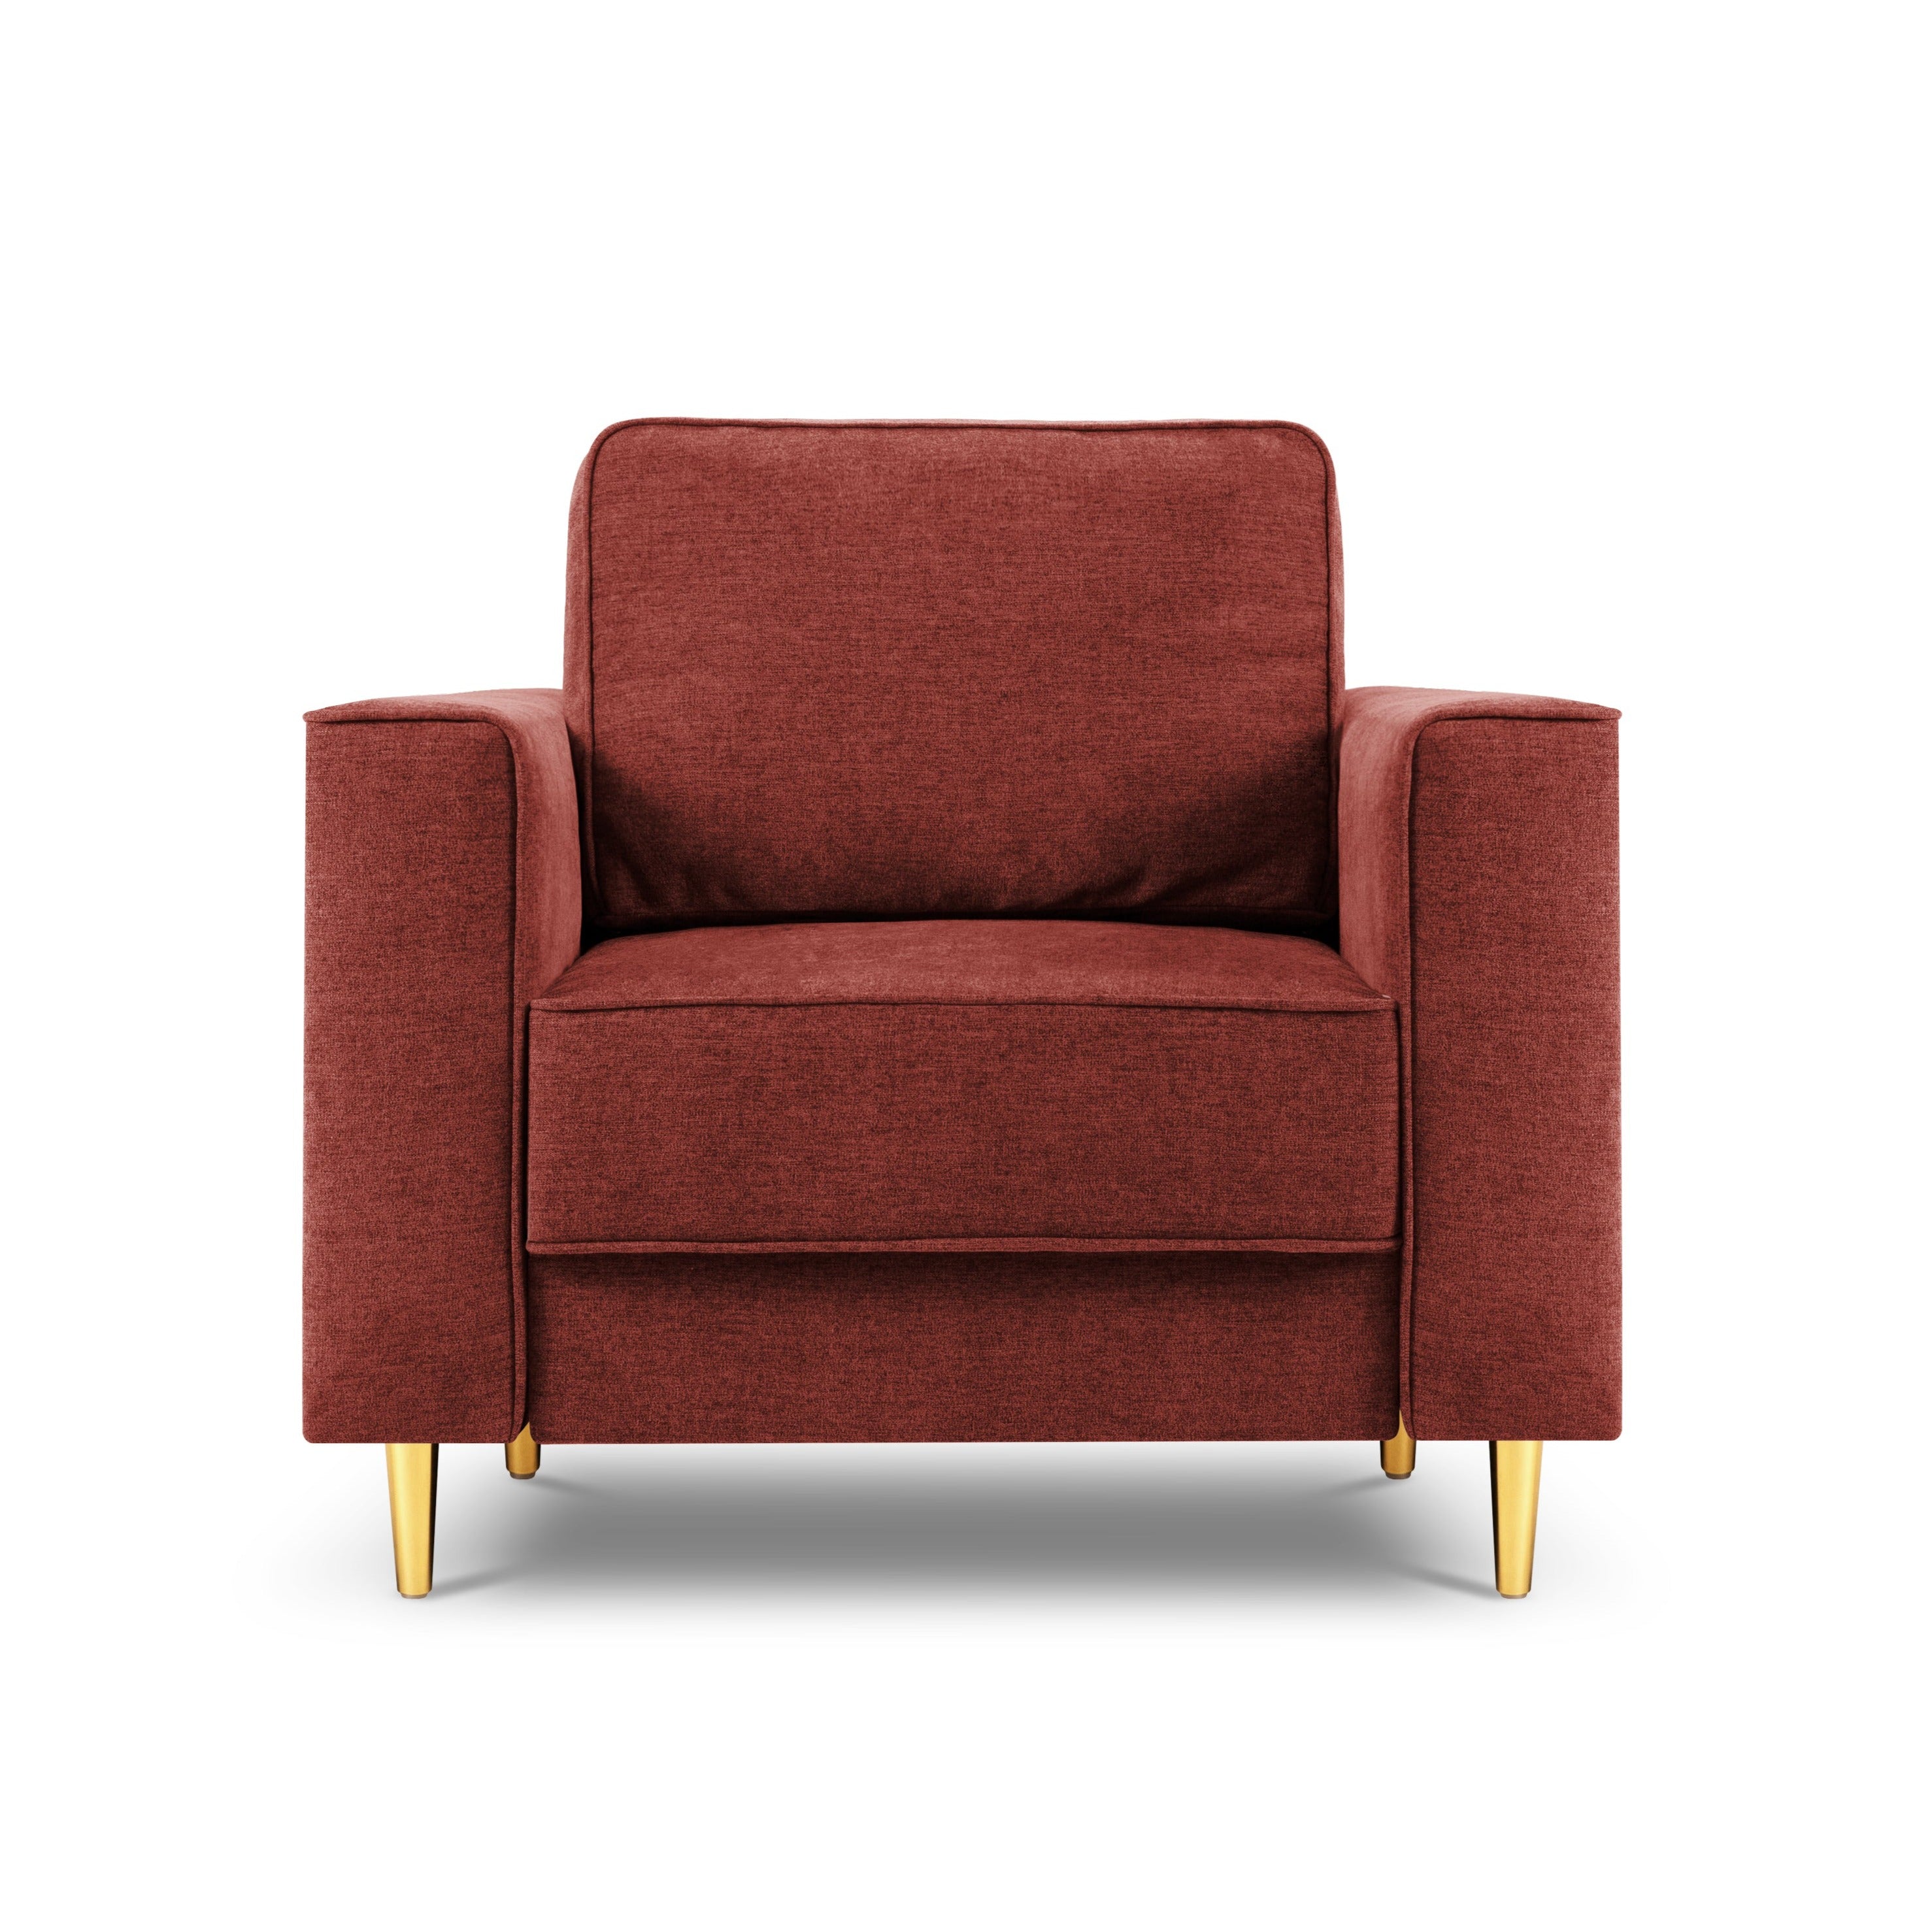 burgundy armchair with a golden base